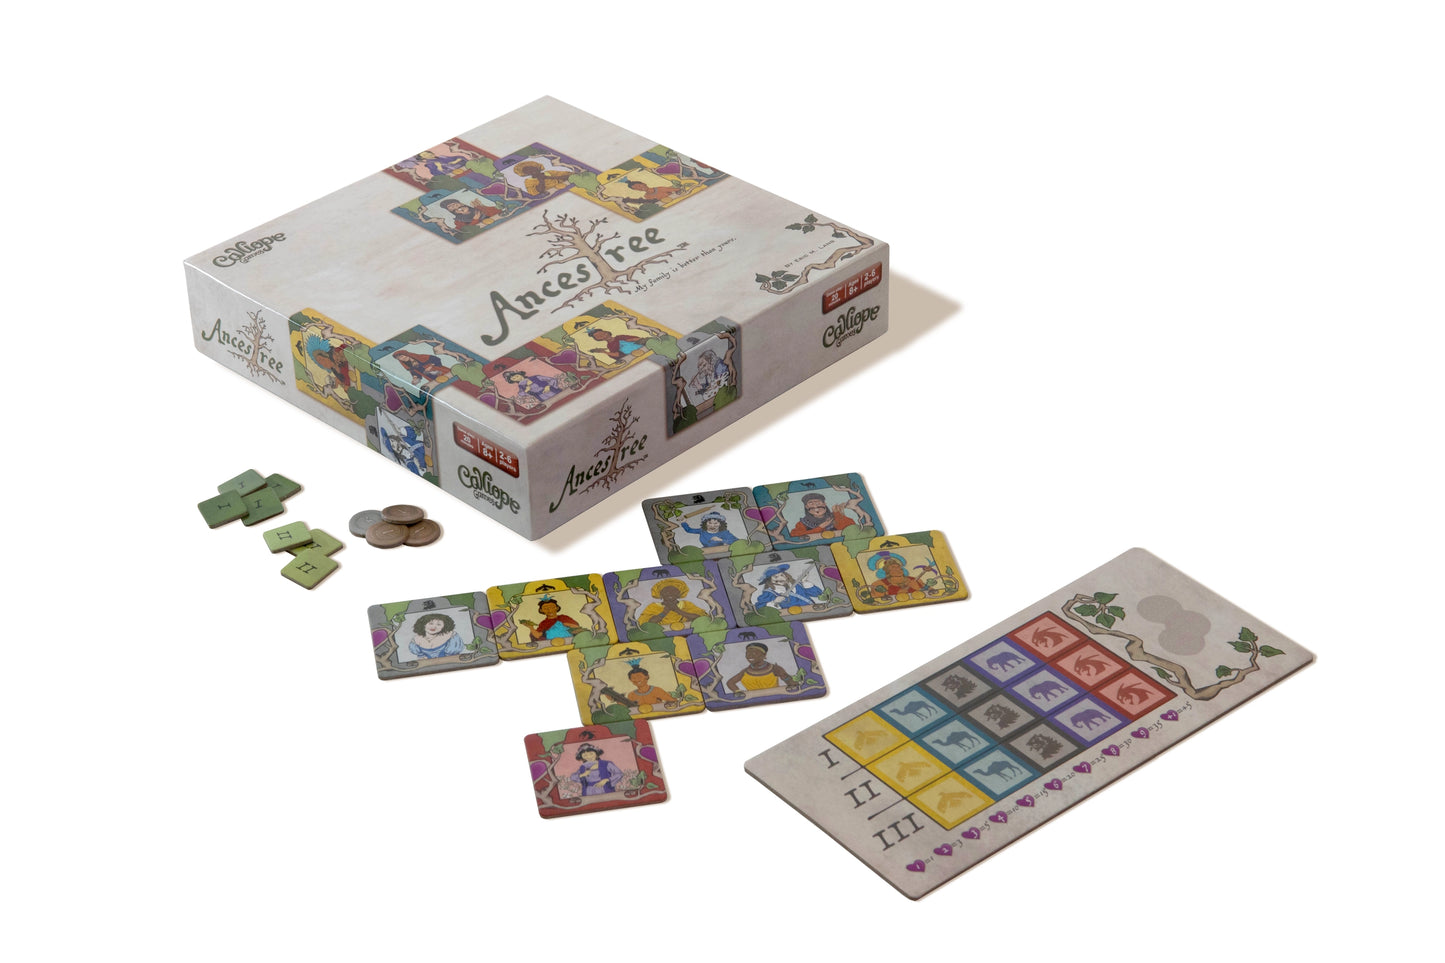 Ancestree - An Elegant Tile Drafting Family Board Game